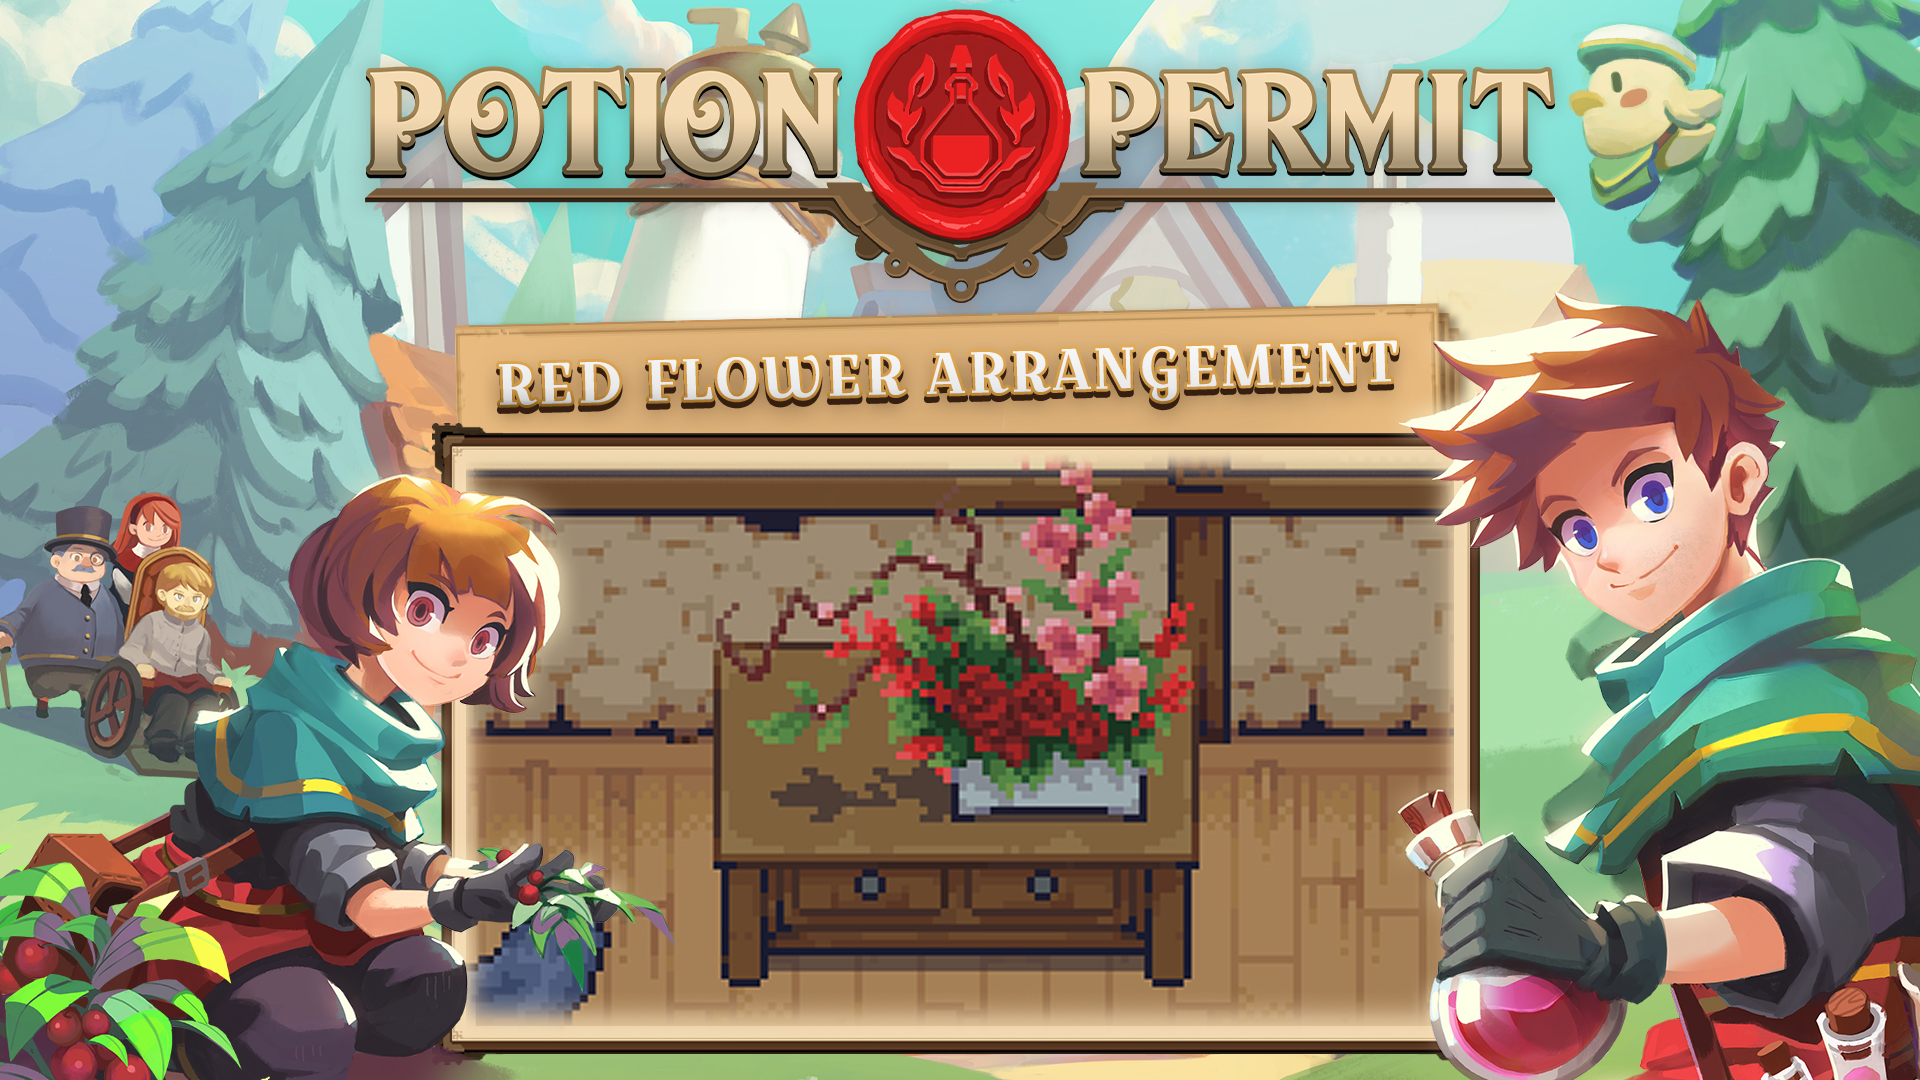 Potion Permit - Red Flower Arrangement